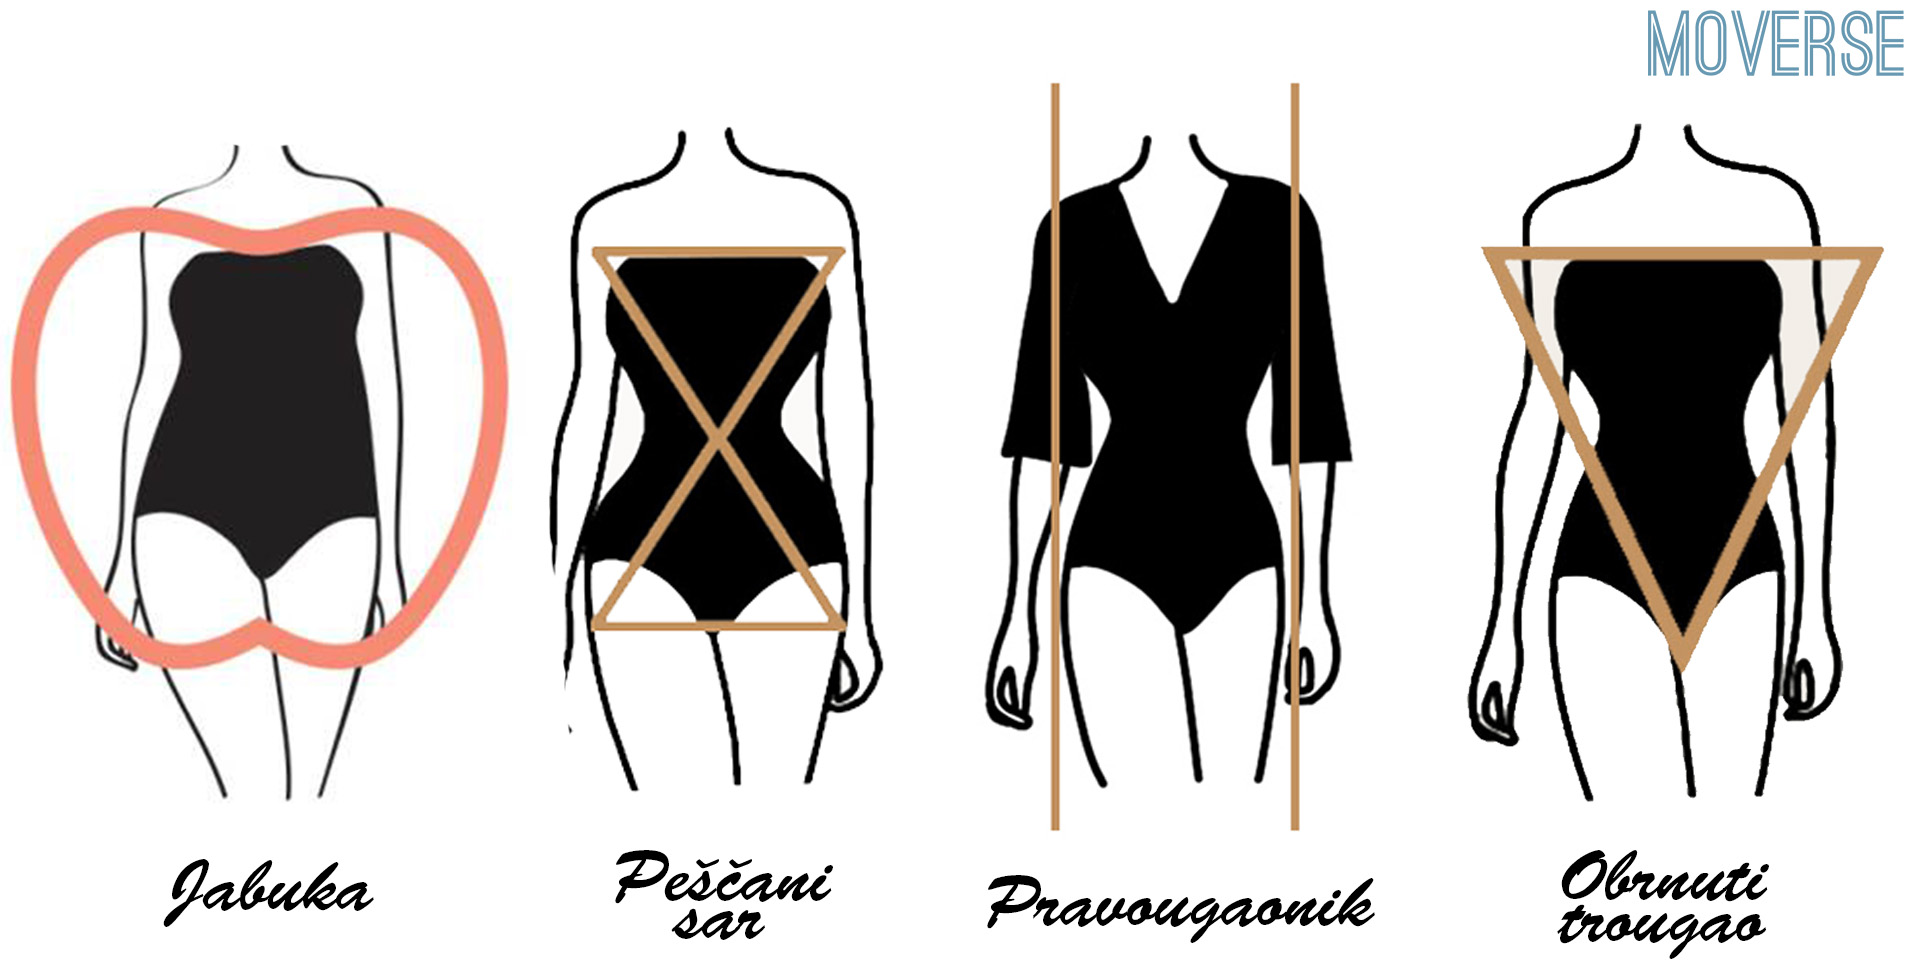 Ženski oblici tela: peščani sat, jabuka, obrnuti trougao, i pravougaonik